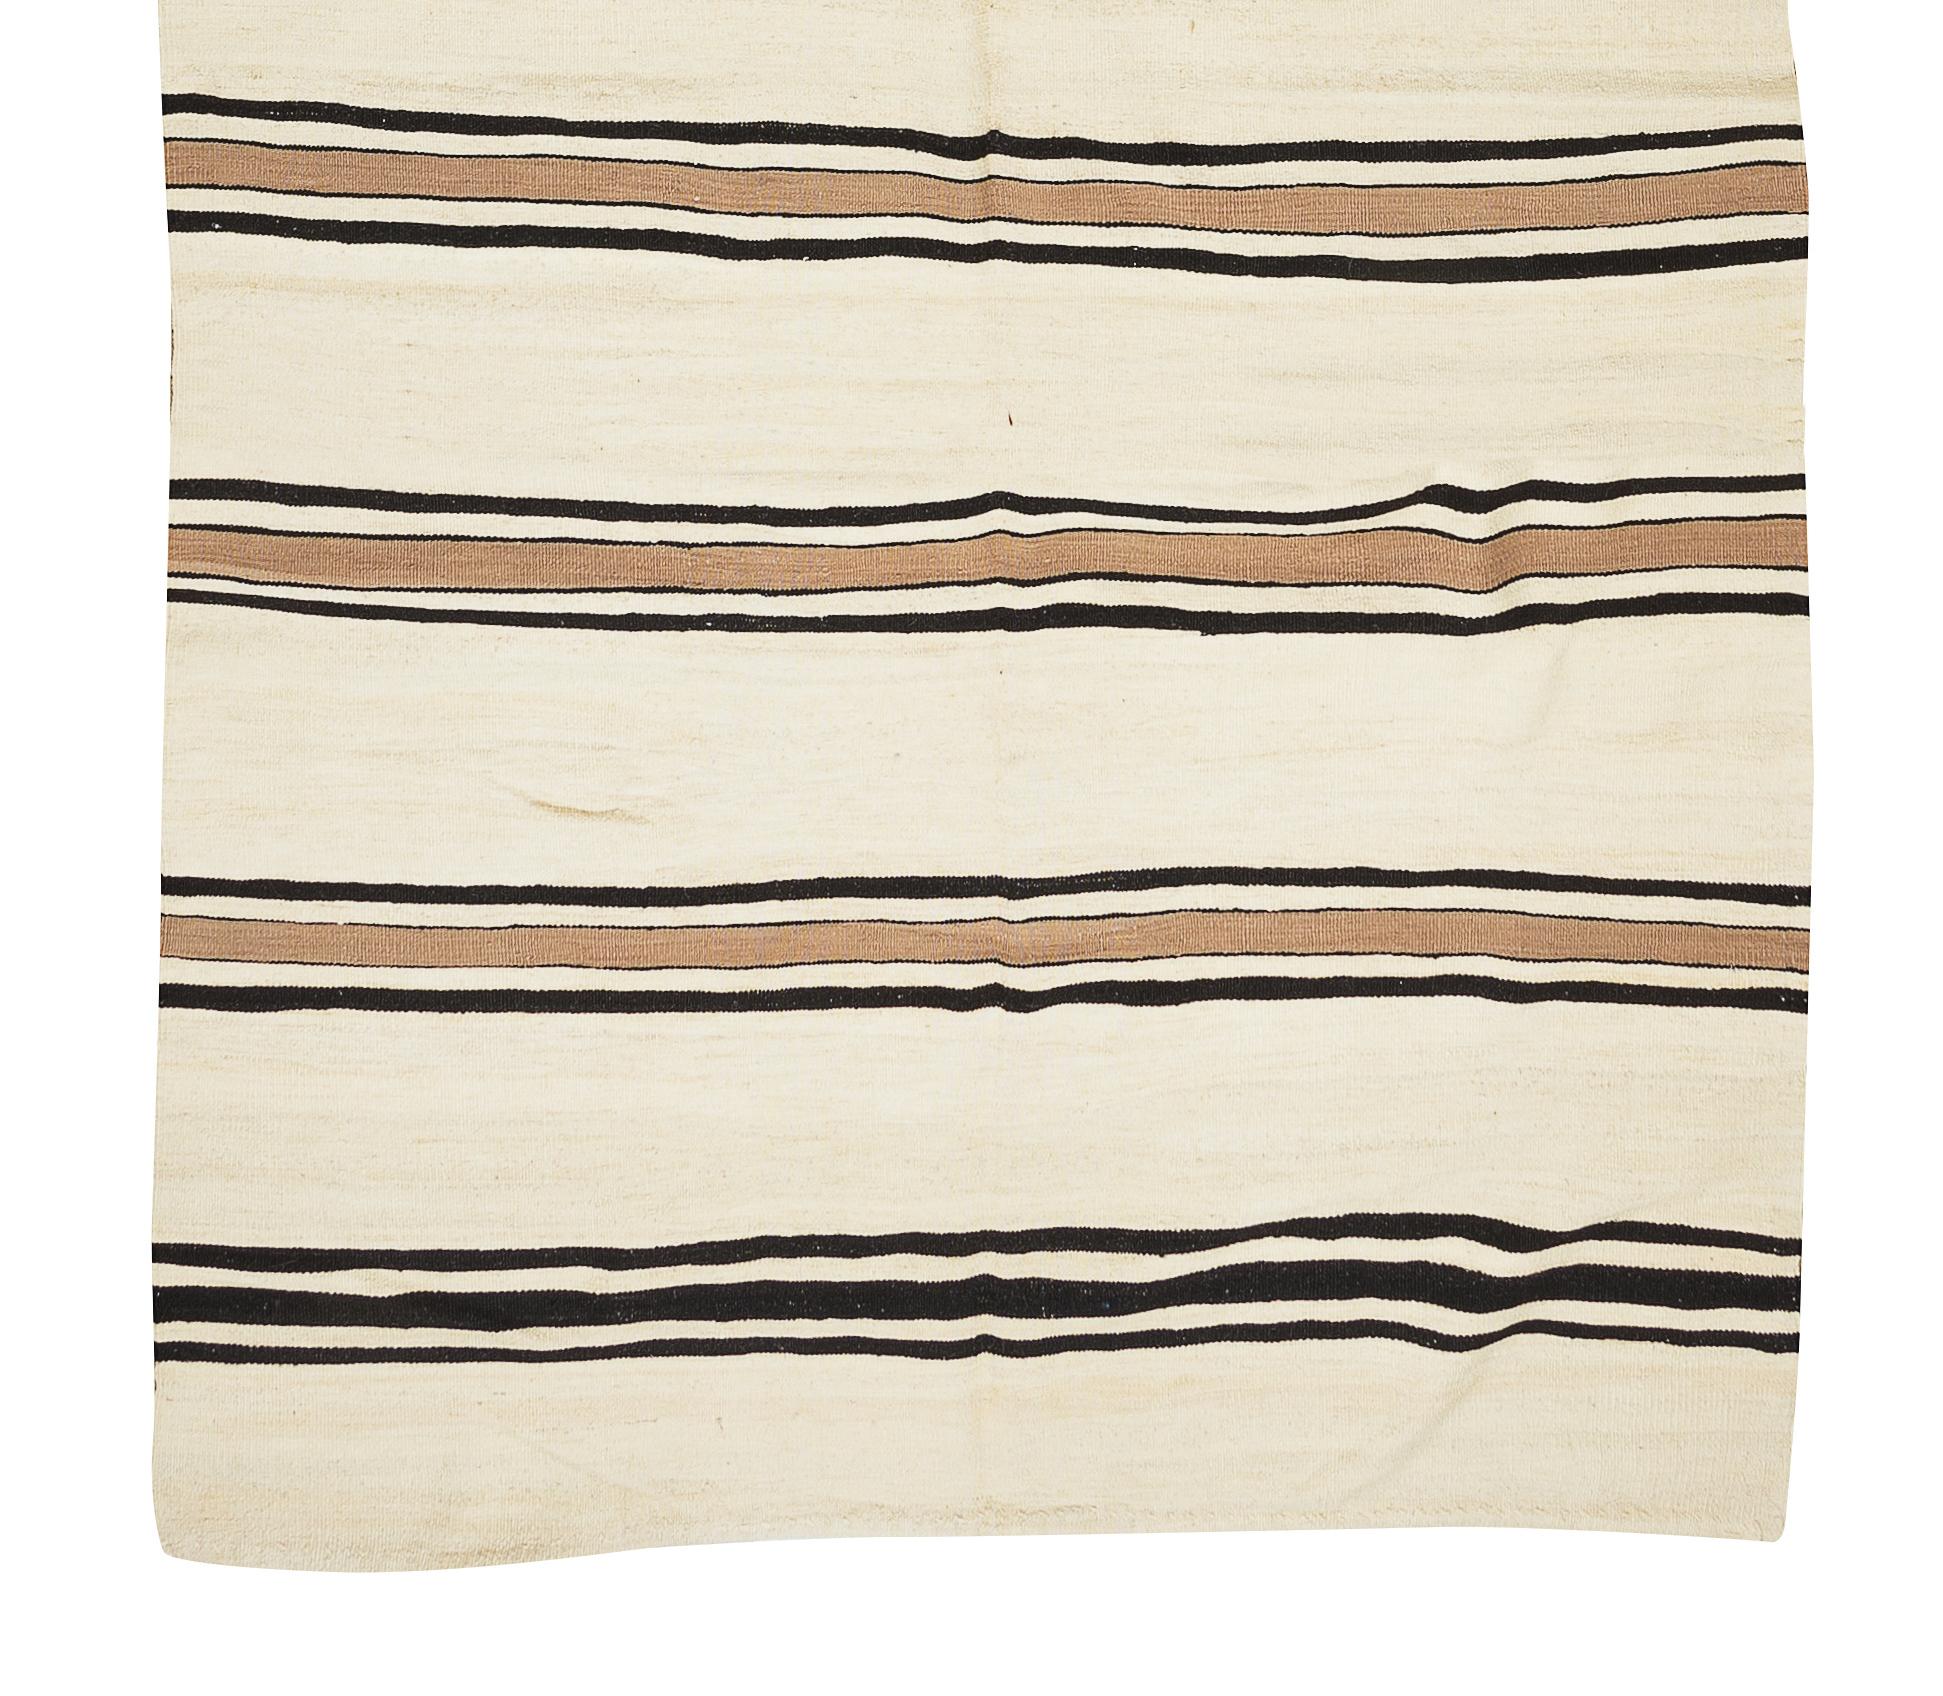 Wool 4.8x17 Ft Long Vintage Turkish Runner Kilim in Beige with Brown & Black Stripes For Sale